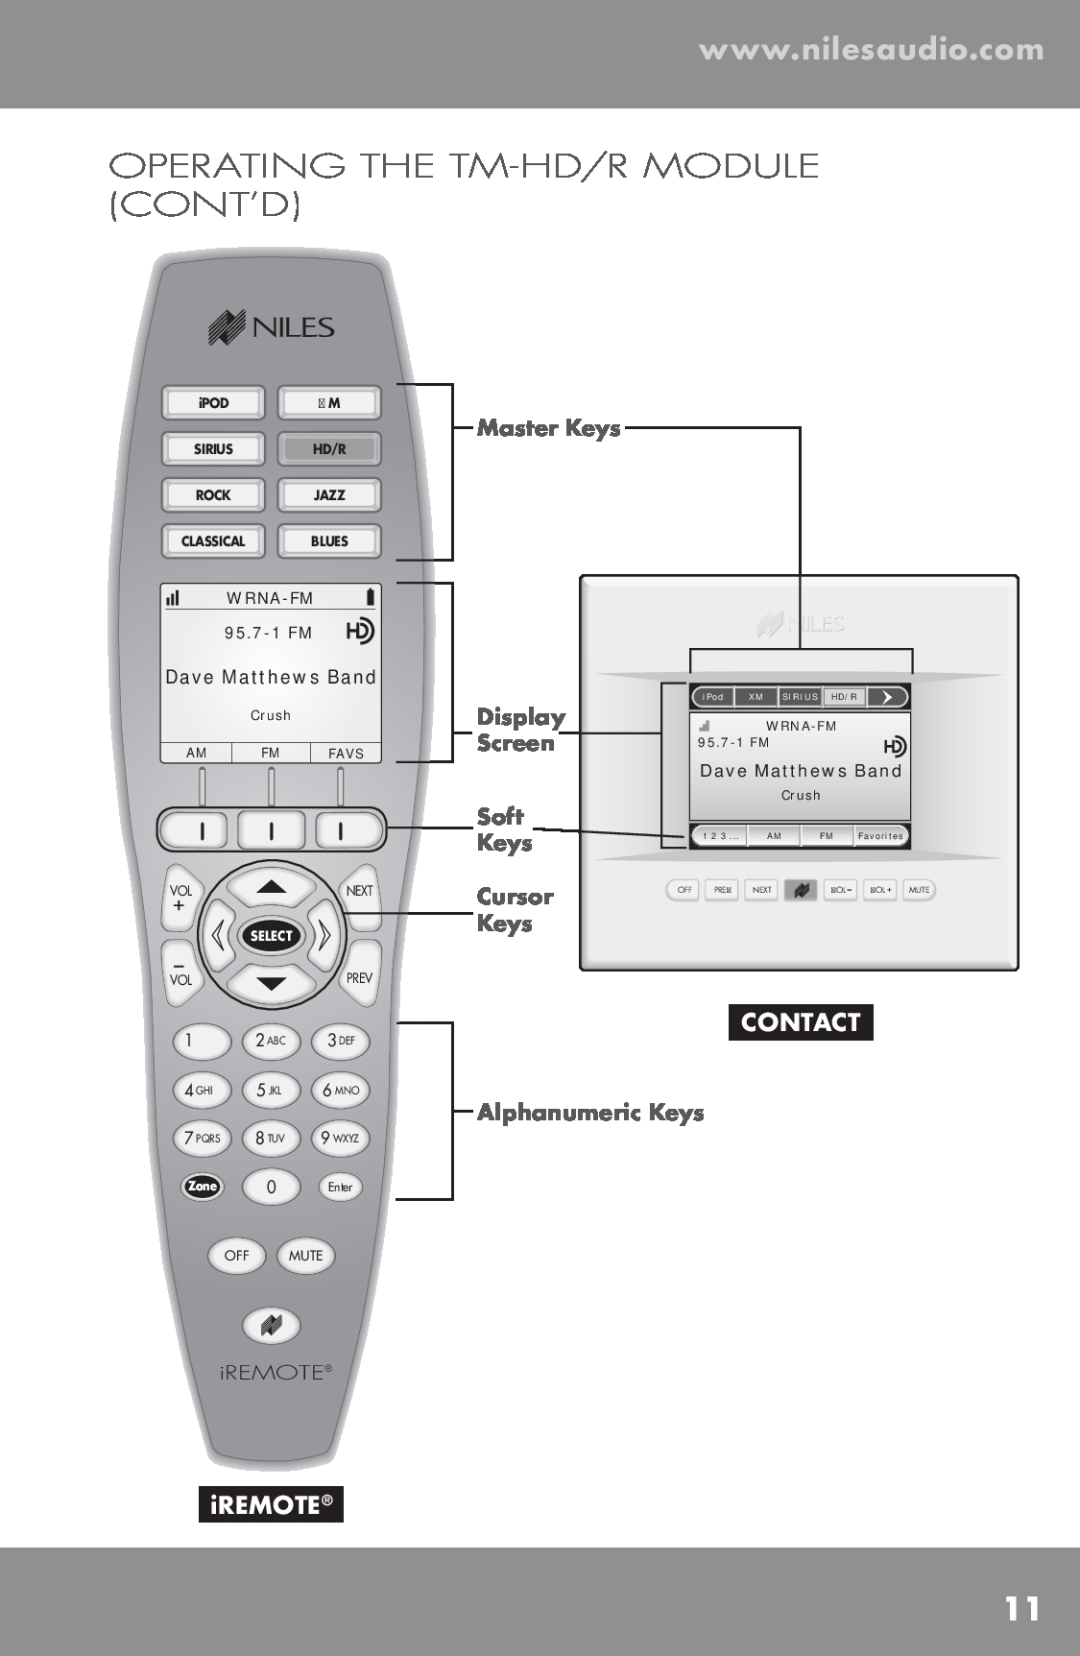 Niles Audio TM-HD/R Operating The Tm-Hd/Rmodule Cont’D, Contact, iREMOTE, Master Keys, Display, Screen, Soft, Cursor, 13&7 